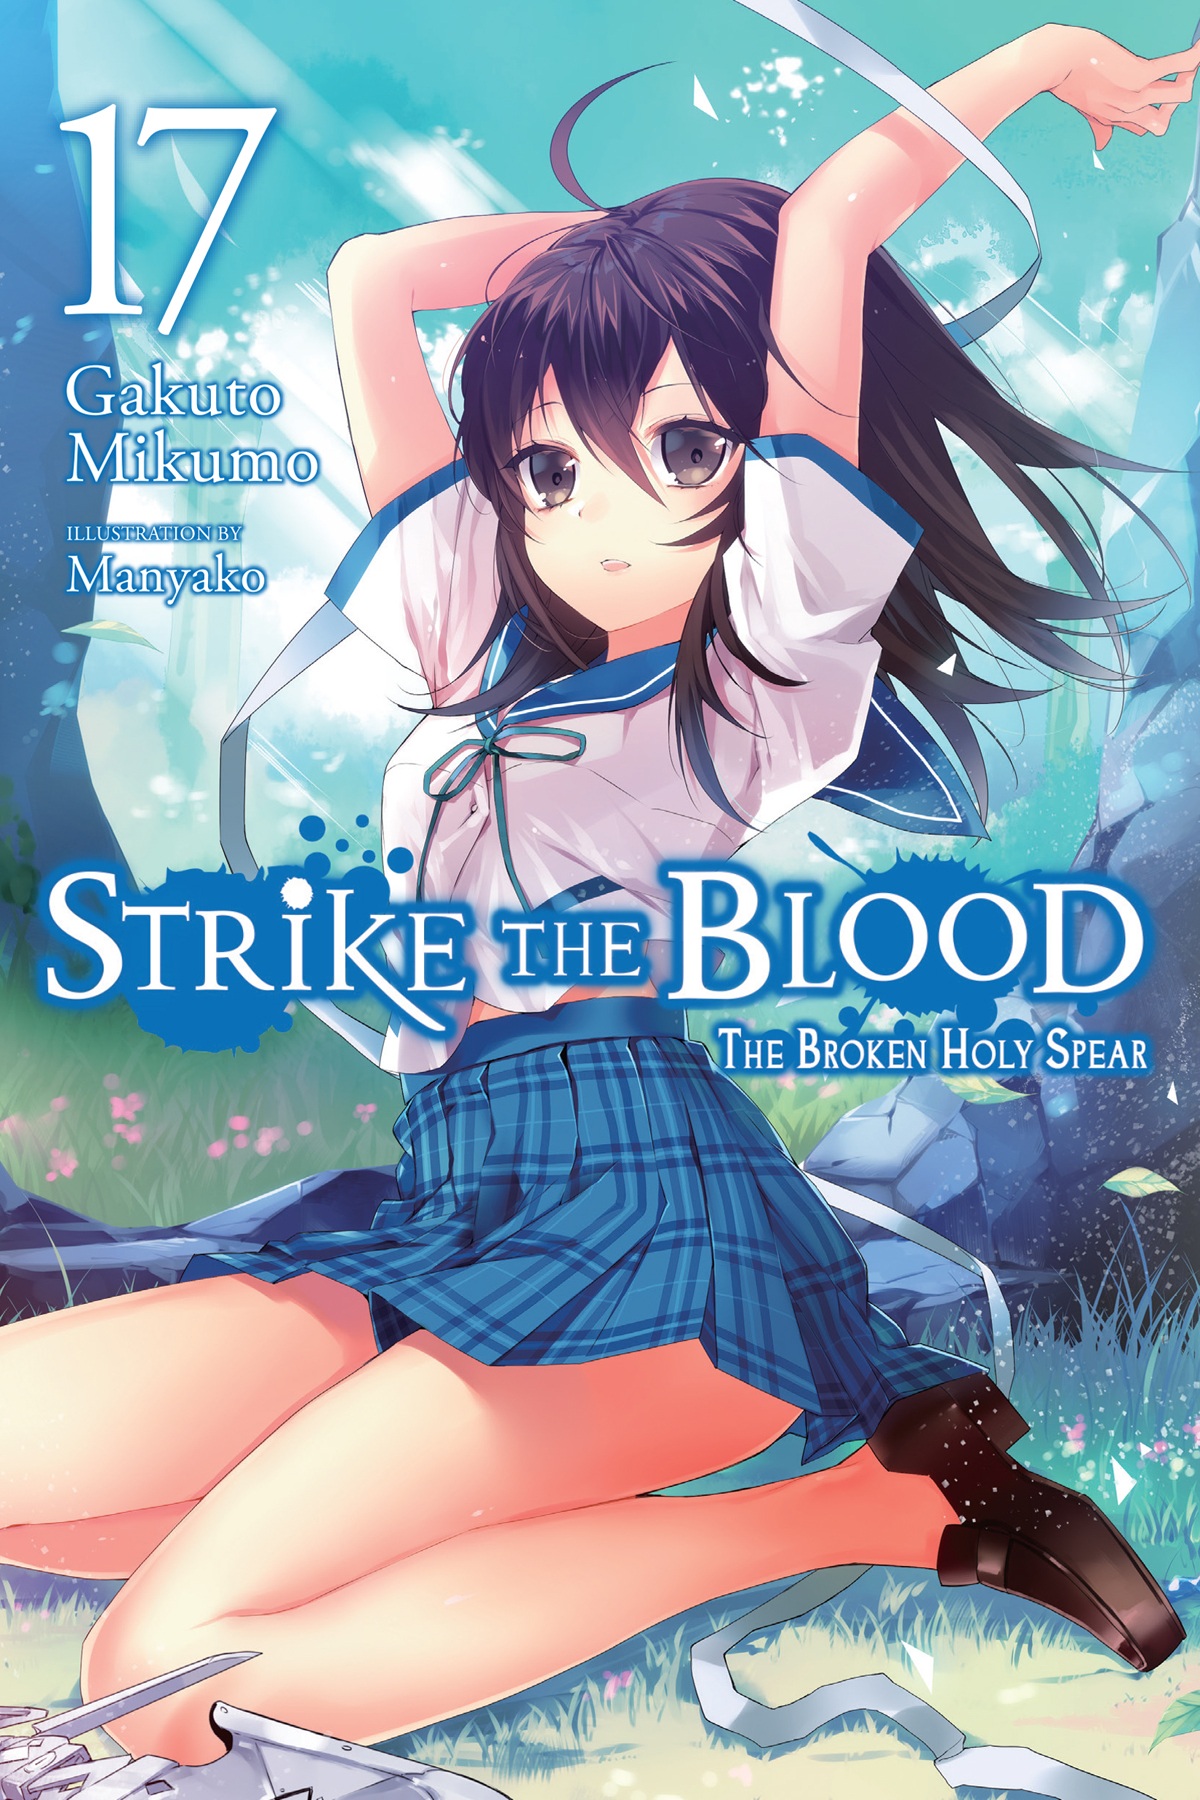 Qoo News] Light novel Strike the Blood makes new OVA to cover